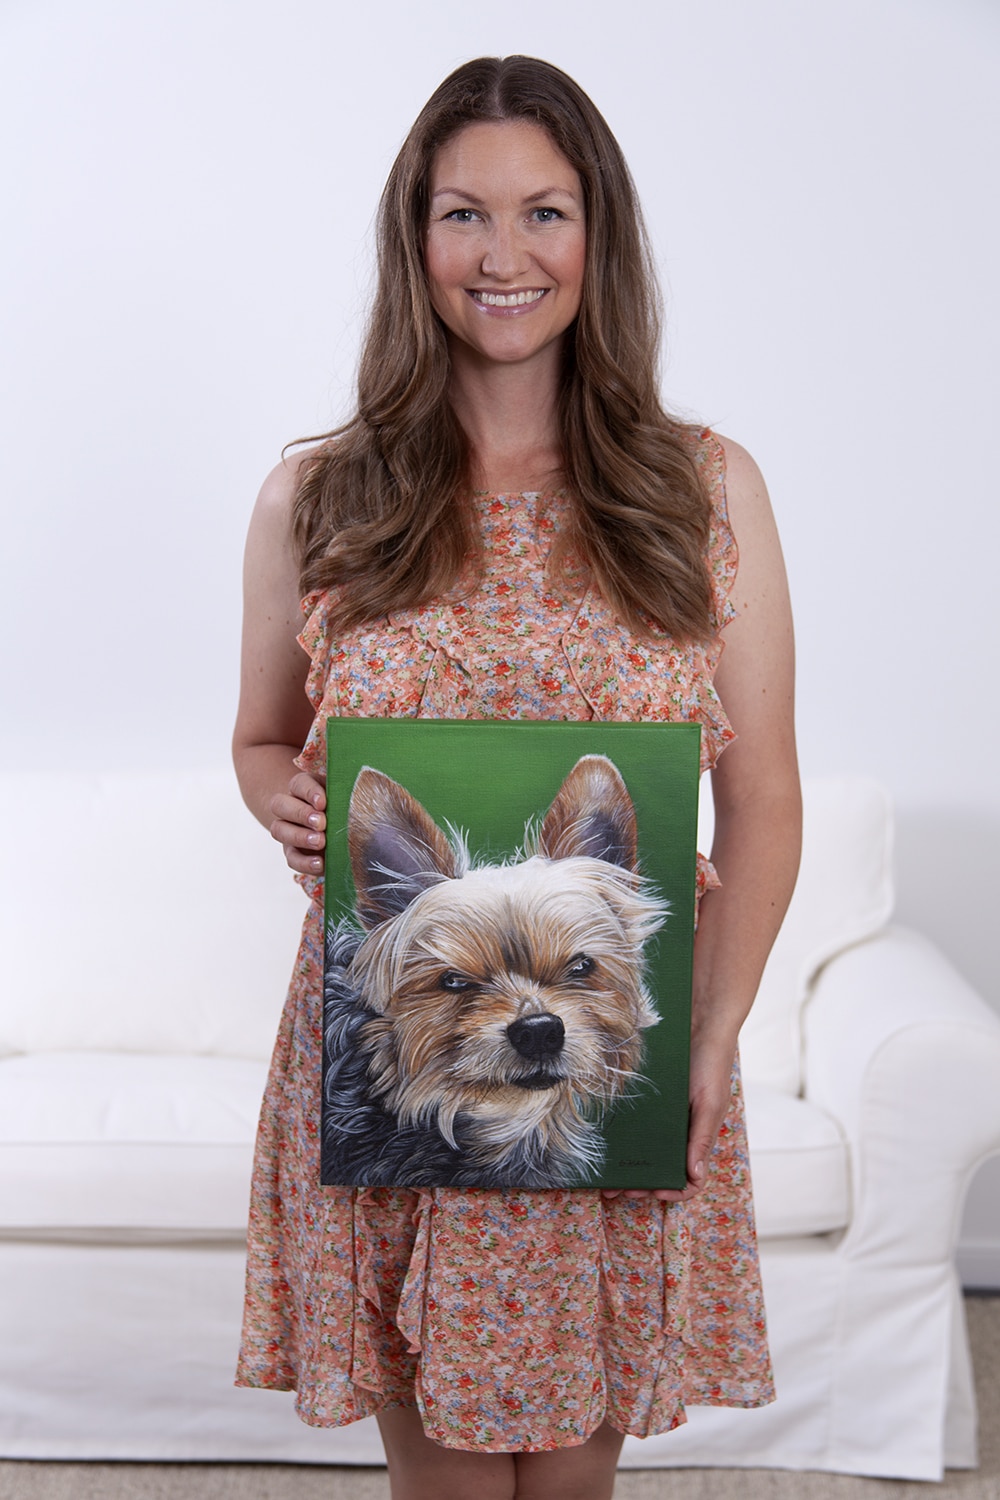 Fine arts painter Erica Eriksdotter holds a custom dog portrait of a yorkshire terrier